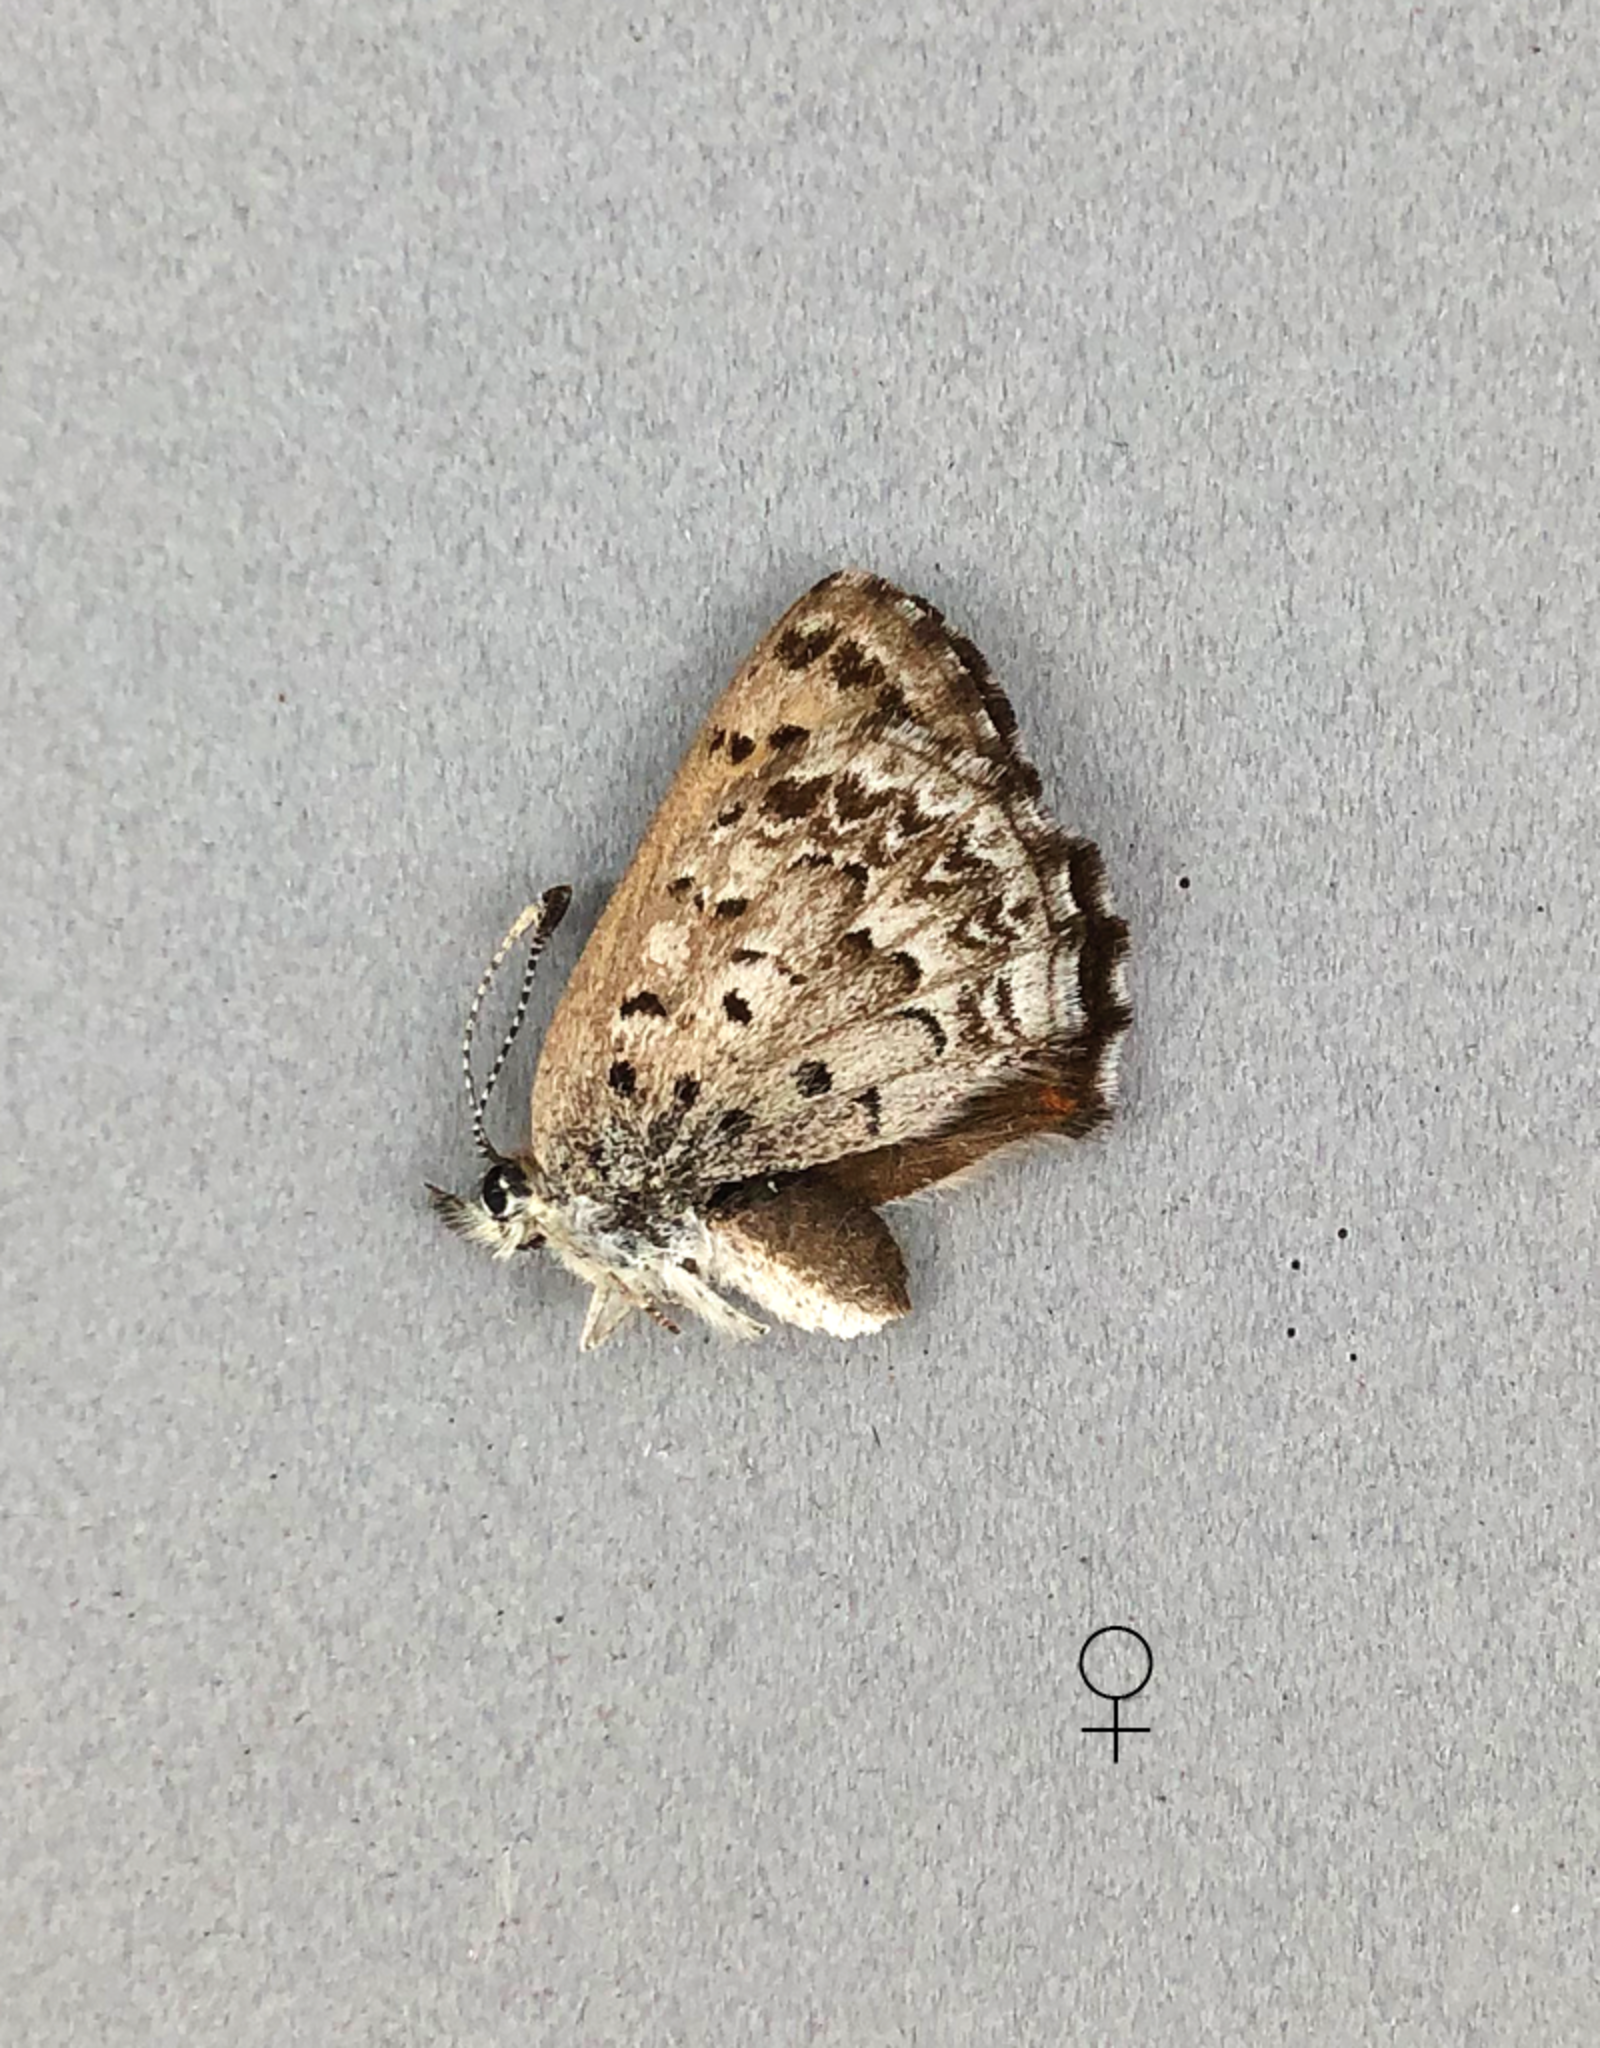 Lycaena mariposa penroseae F A1 Canada